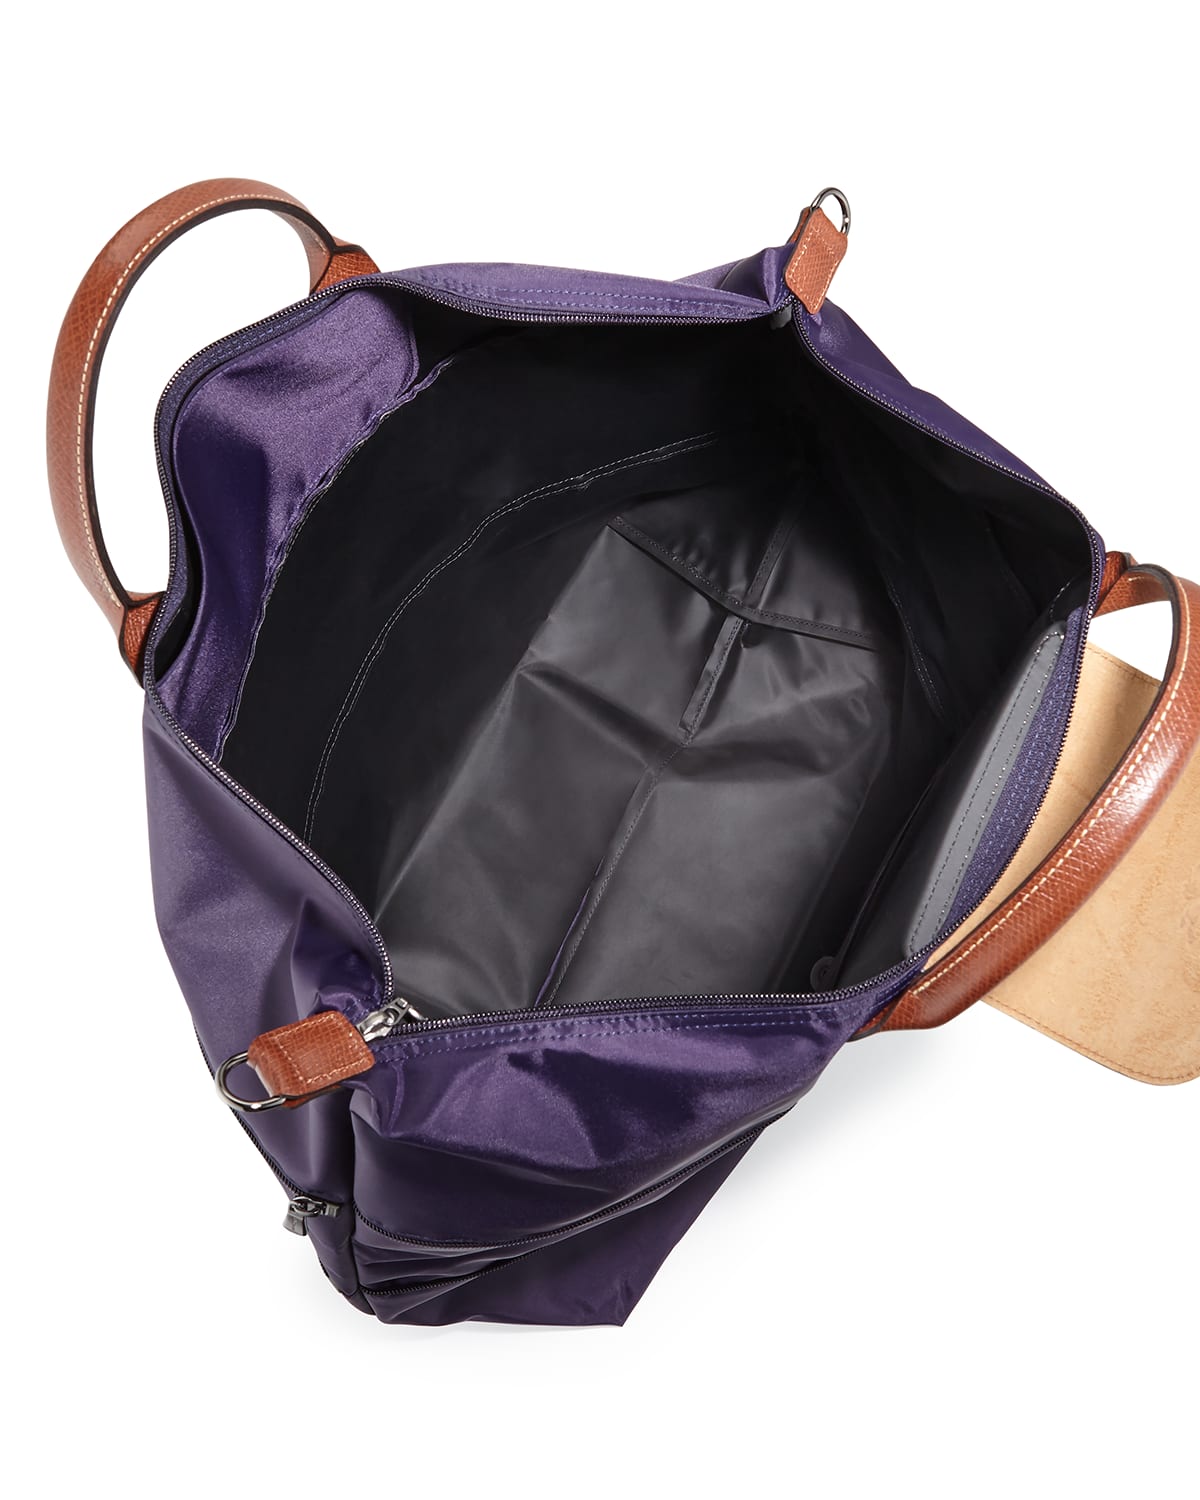 Longchamp Has It in the Bag - Racked